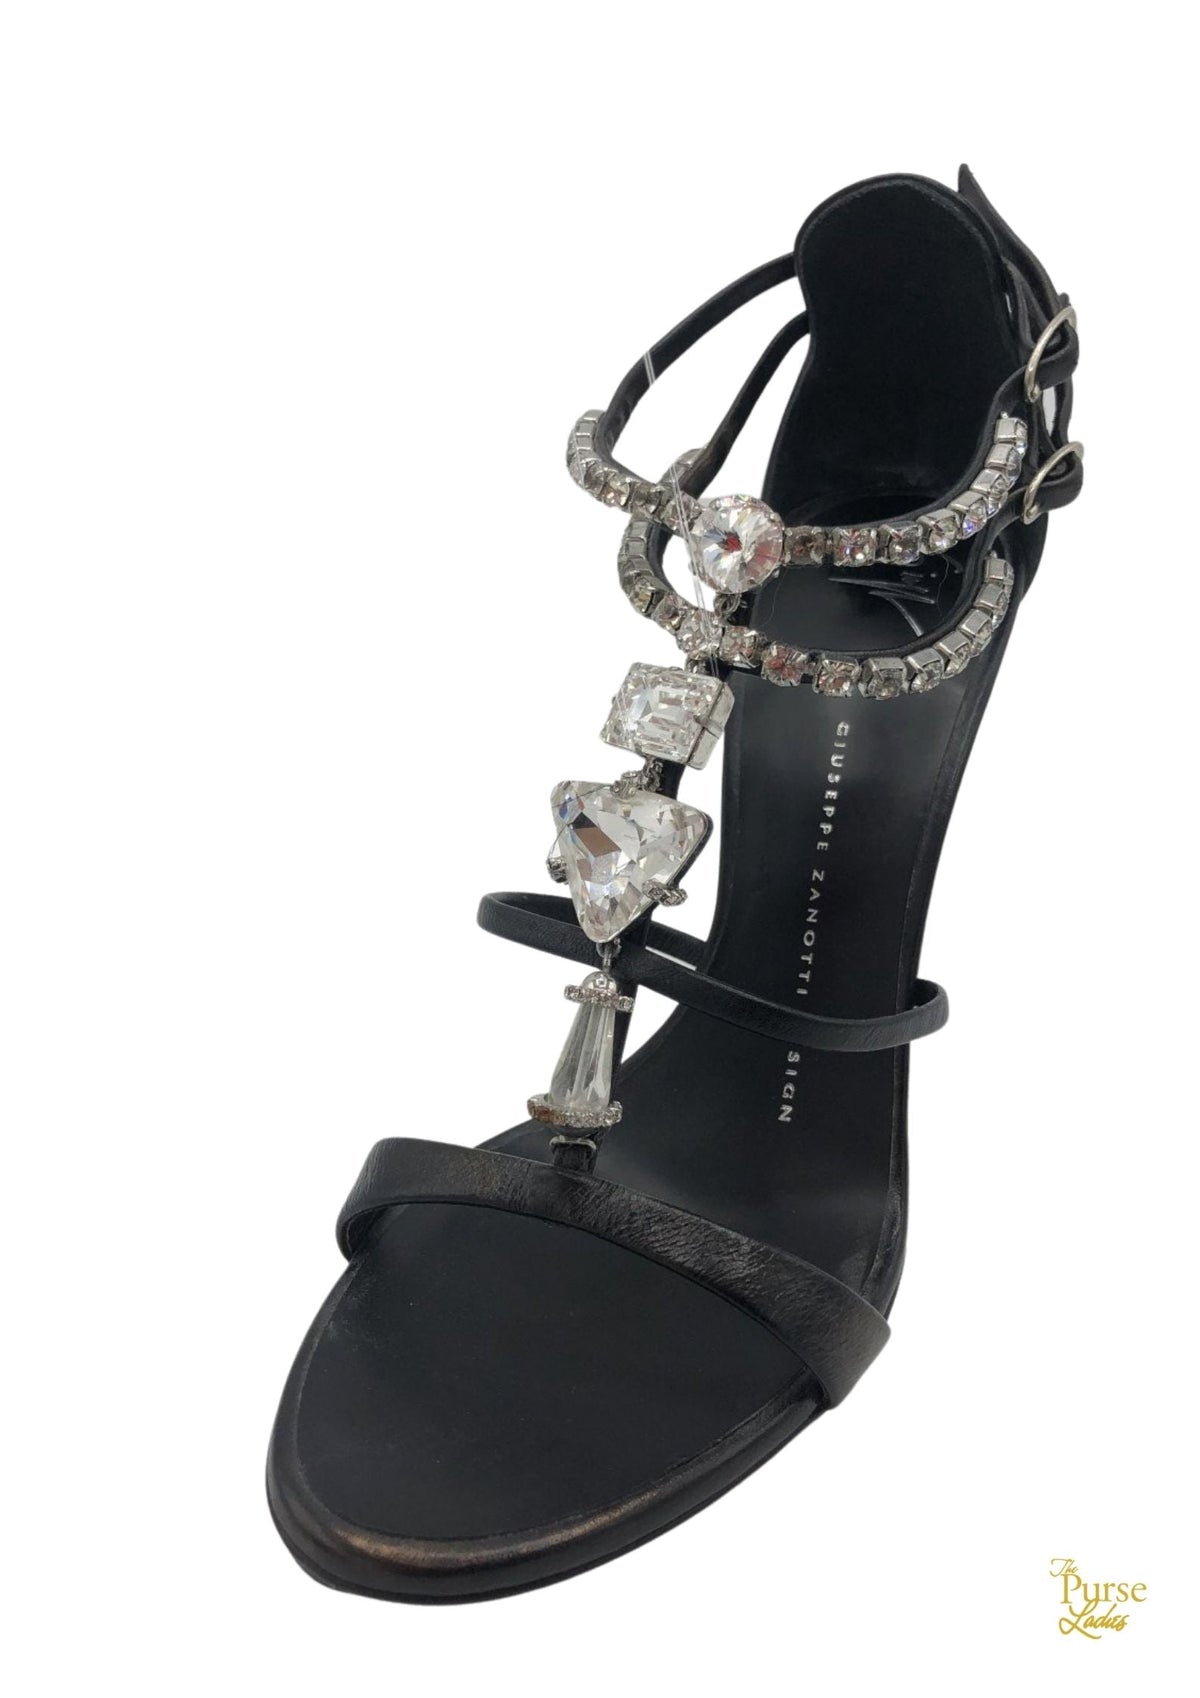 GIUSEPPE ZANOTTI Black Leather Crystal Sandals SZ 36